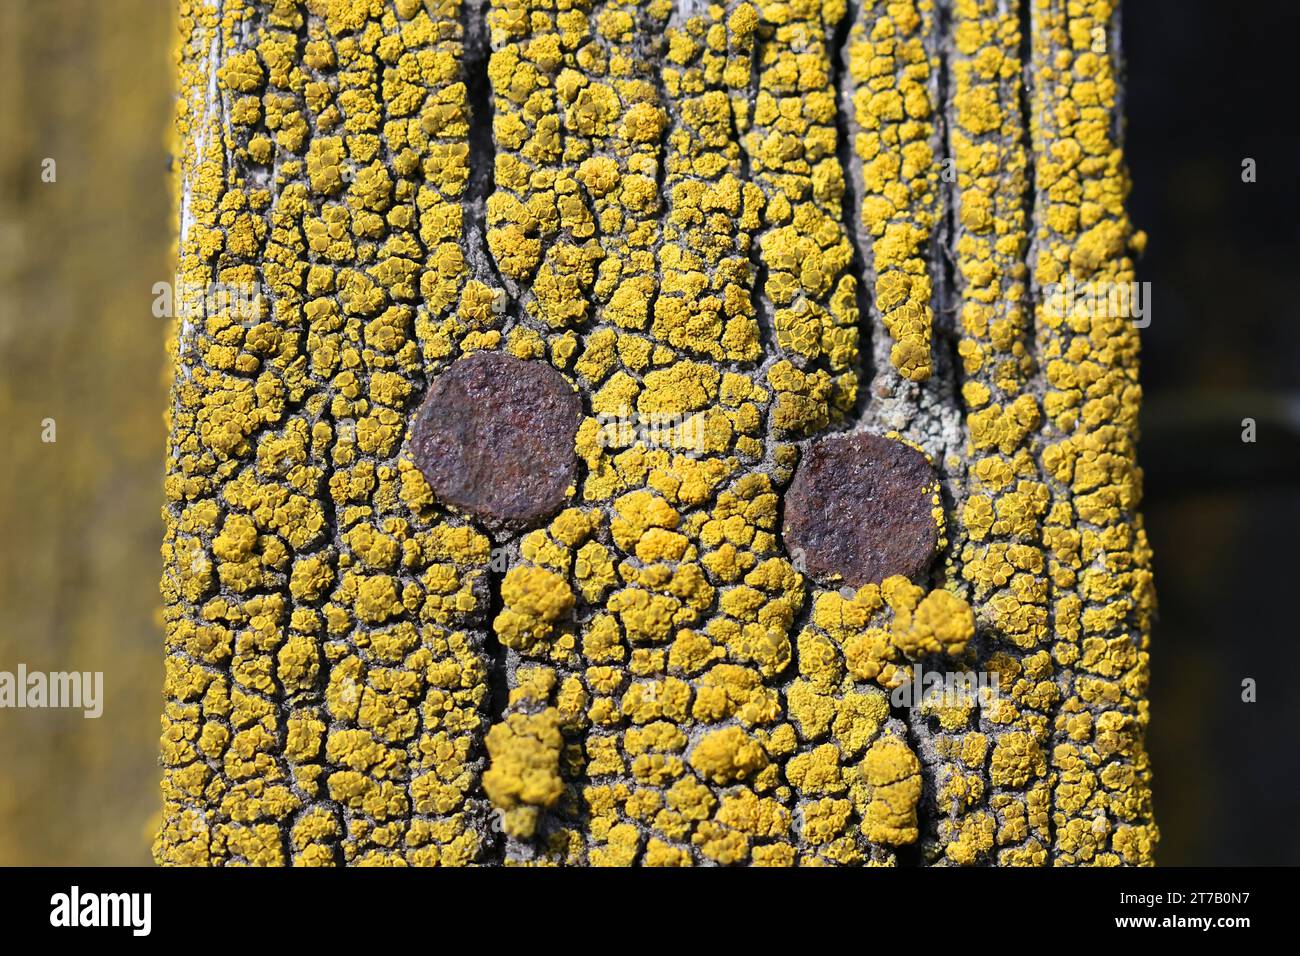 Candelariella vitellina, an eggyolk lichen growing on timber in Finland Stock Photo